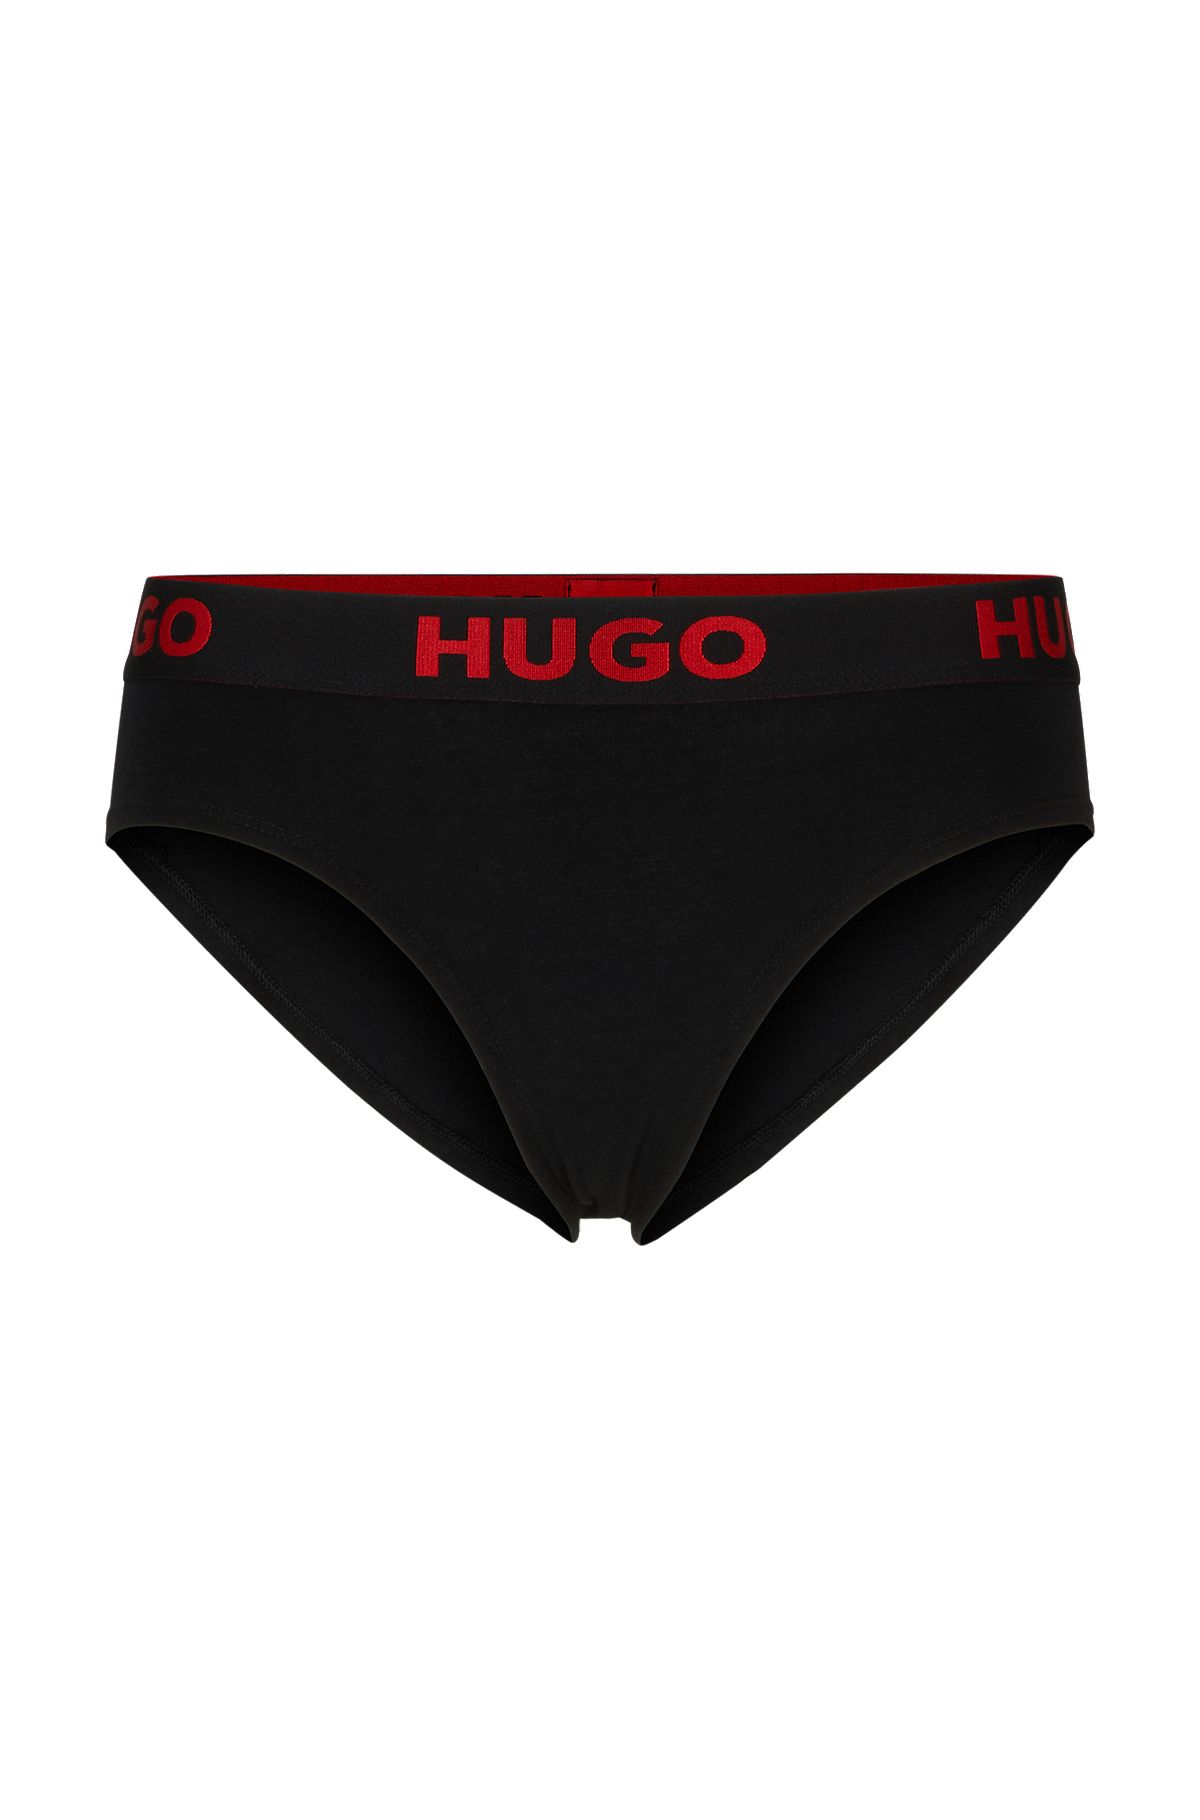 - Stretch-cotton briefs red label HUGO logo with